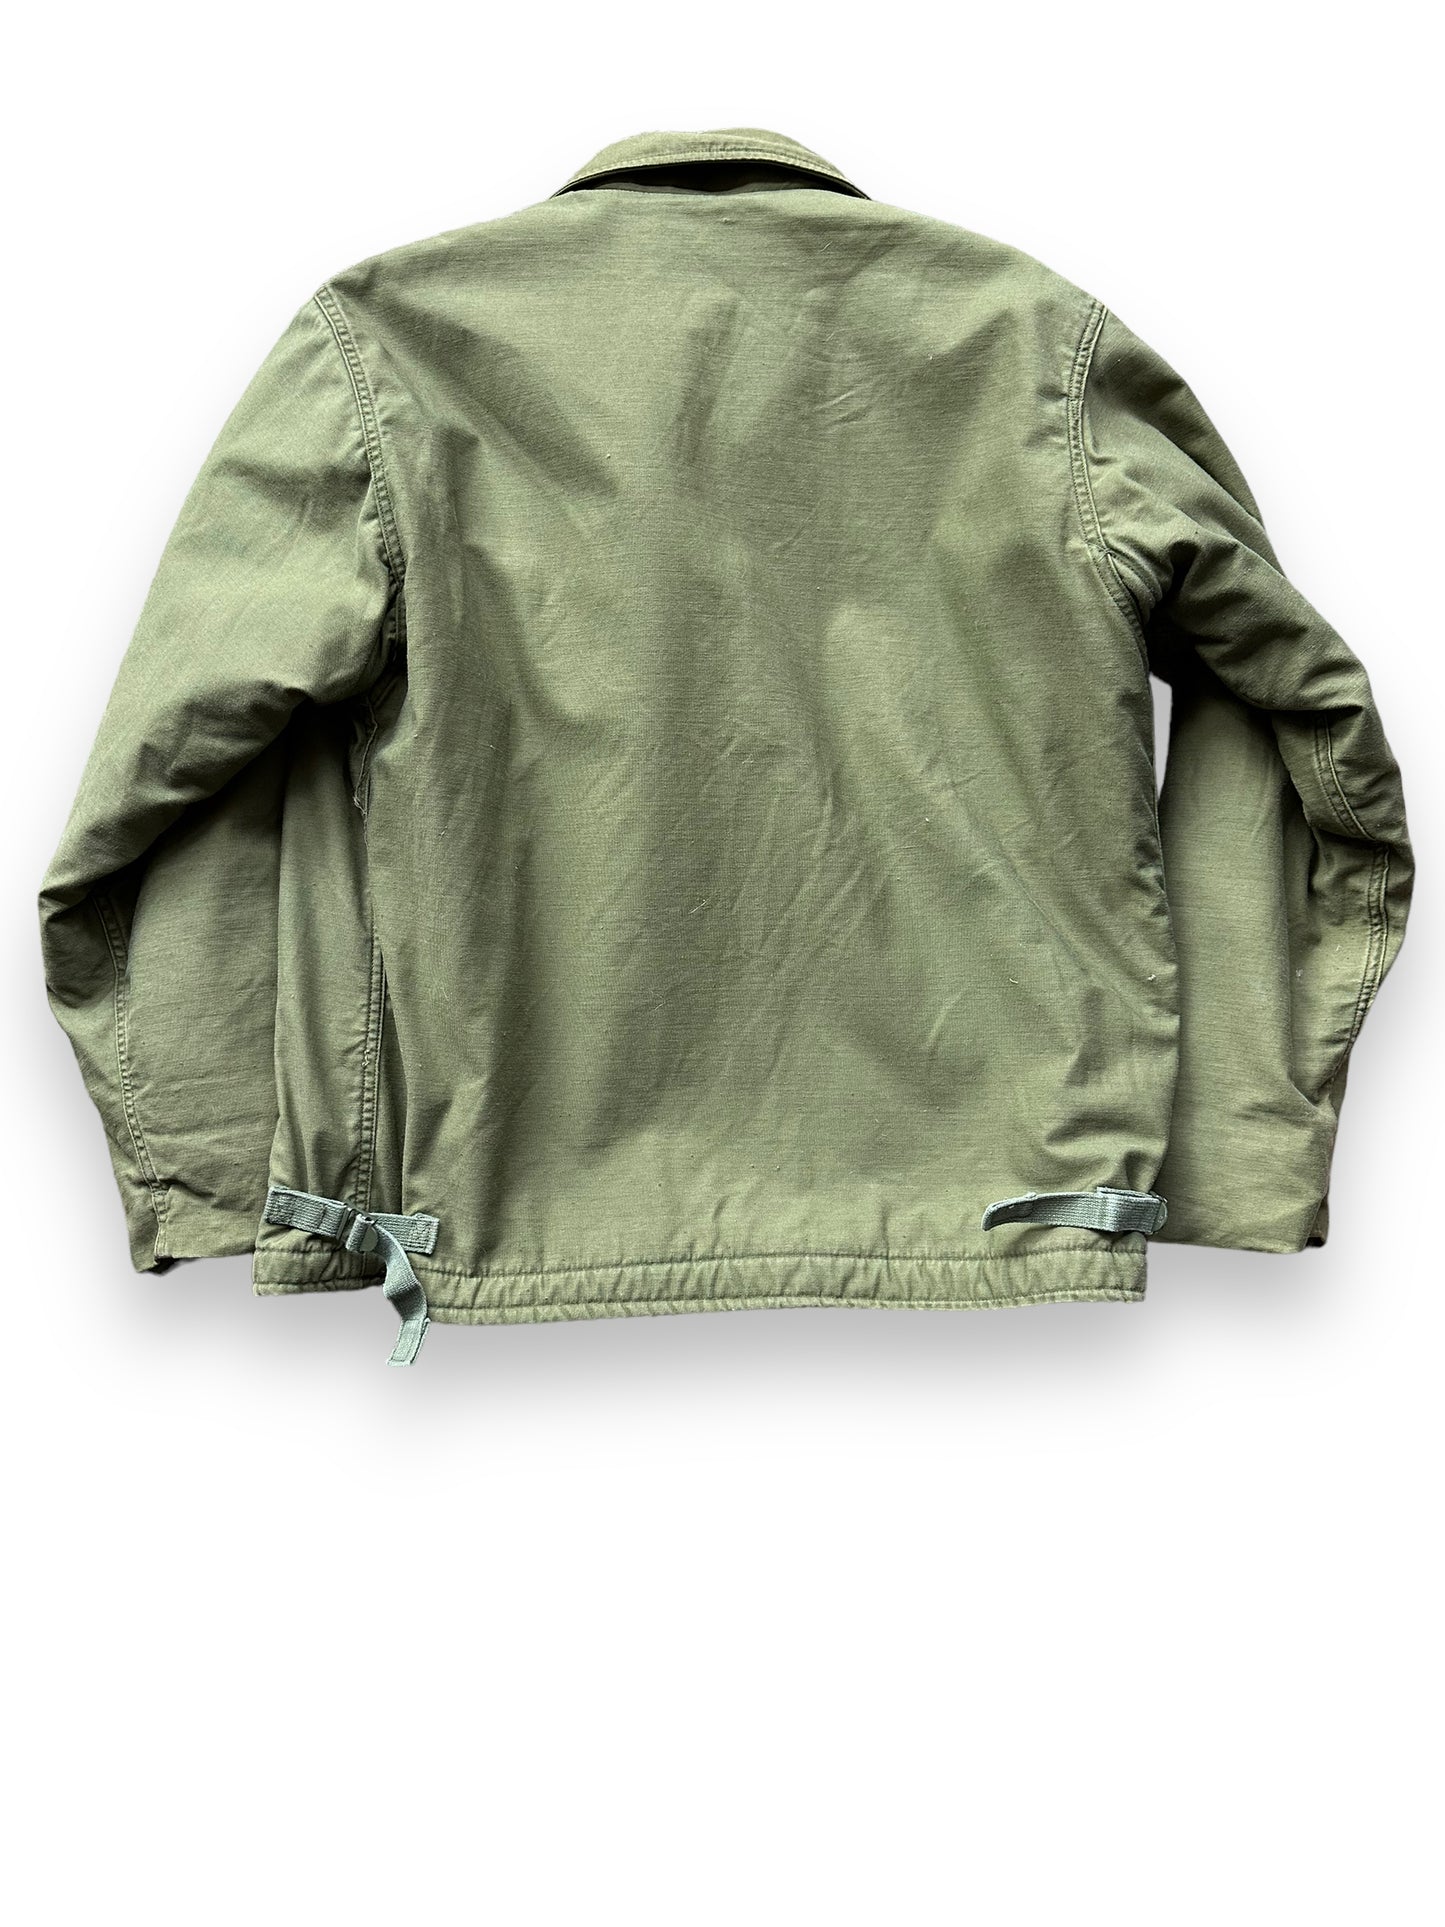 Rear View of Vintage Viet Nam Era Cold Weather A-2 Jacket SZ XL | Vintage Military Jackets Seattle | Barn Owl Vintage Clothing Seattle